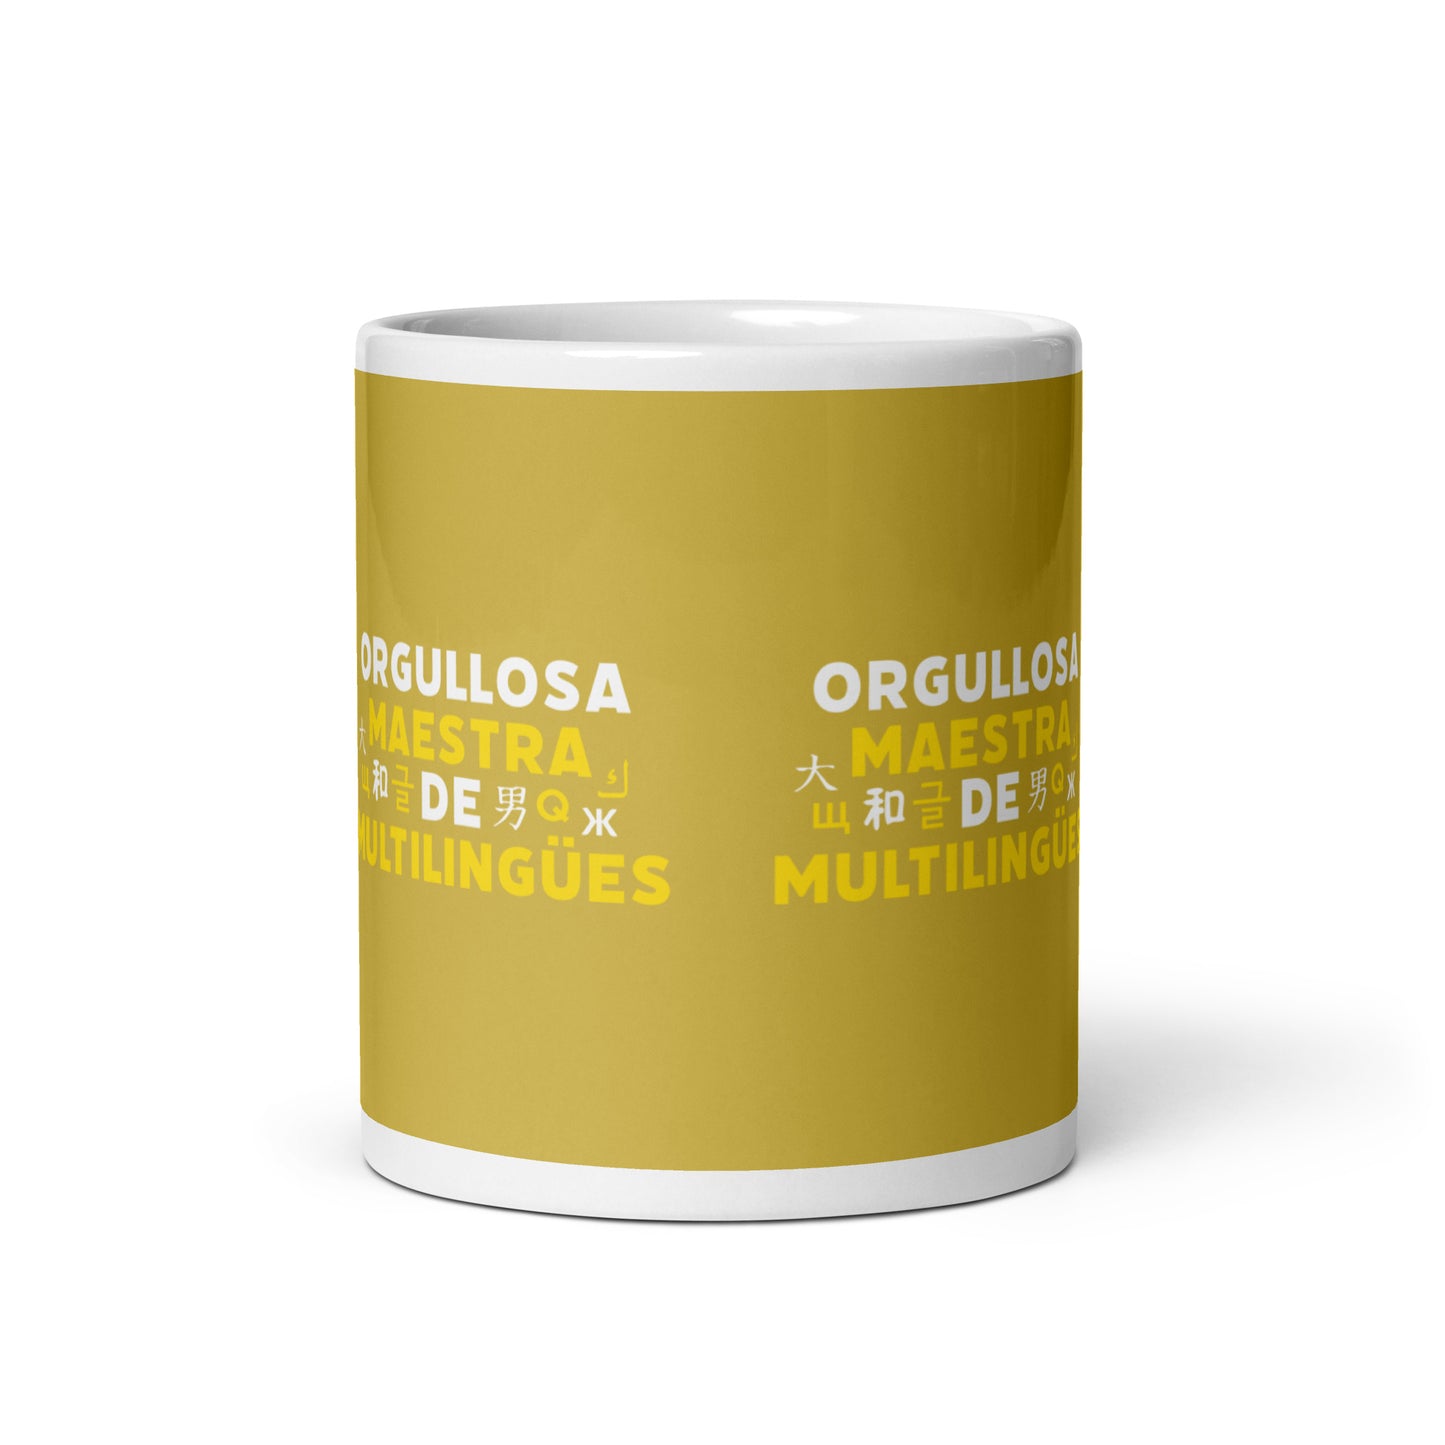 Multilingual teacher White glossy mug (Spanish).